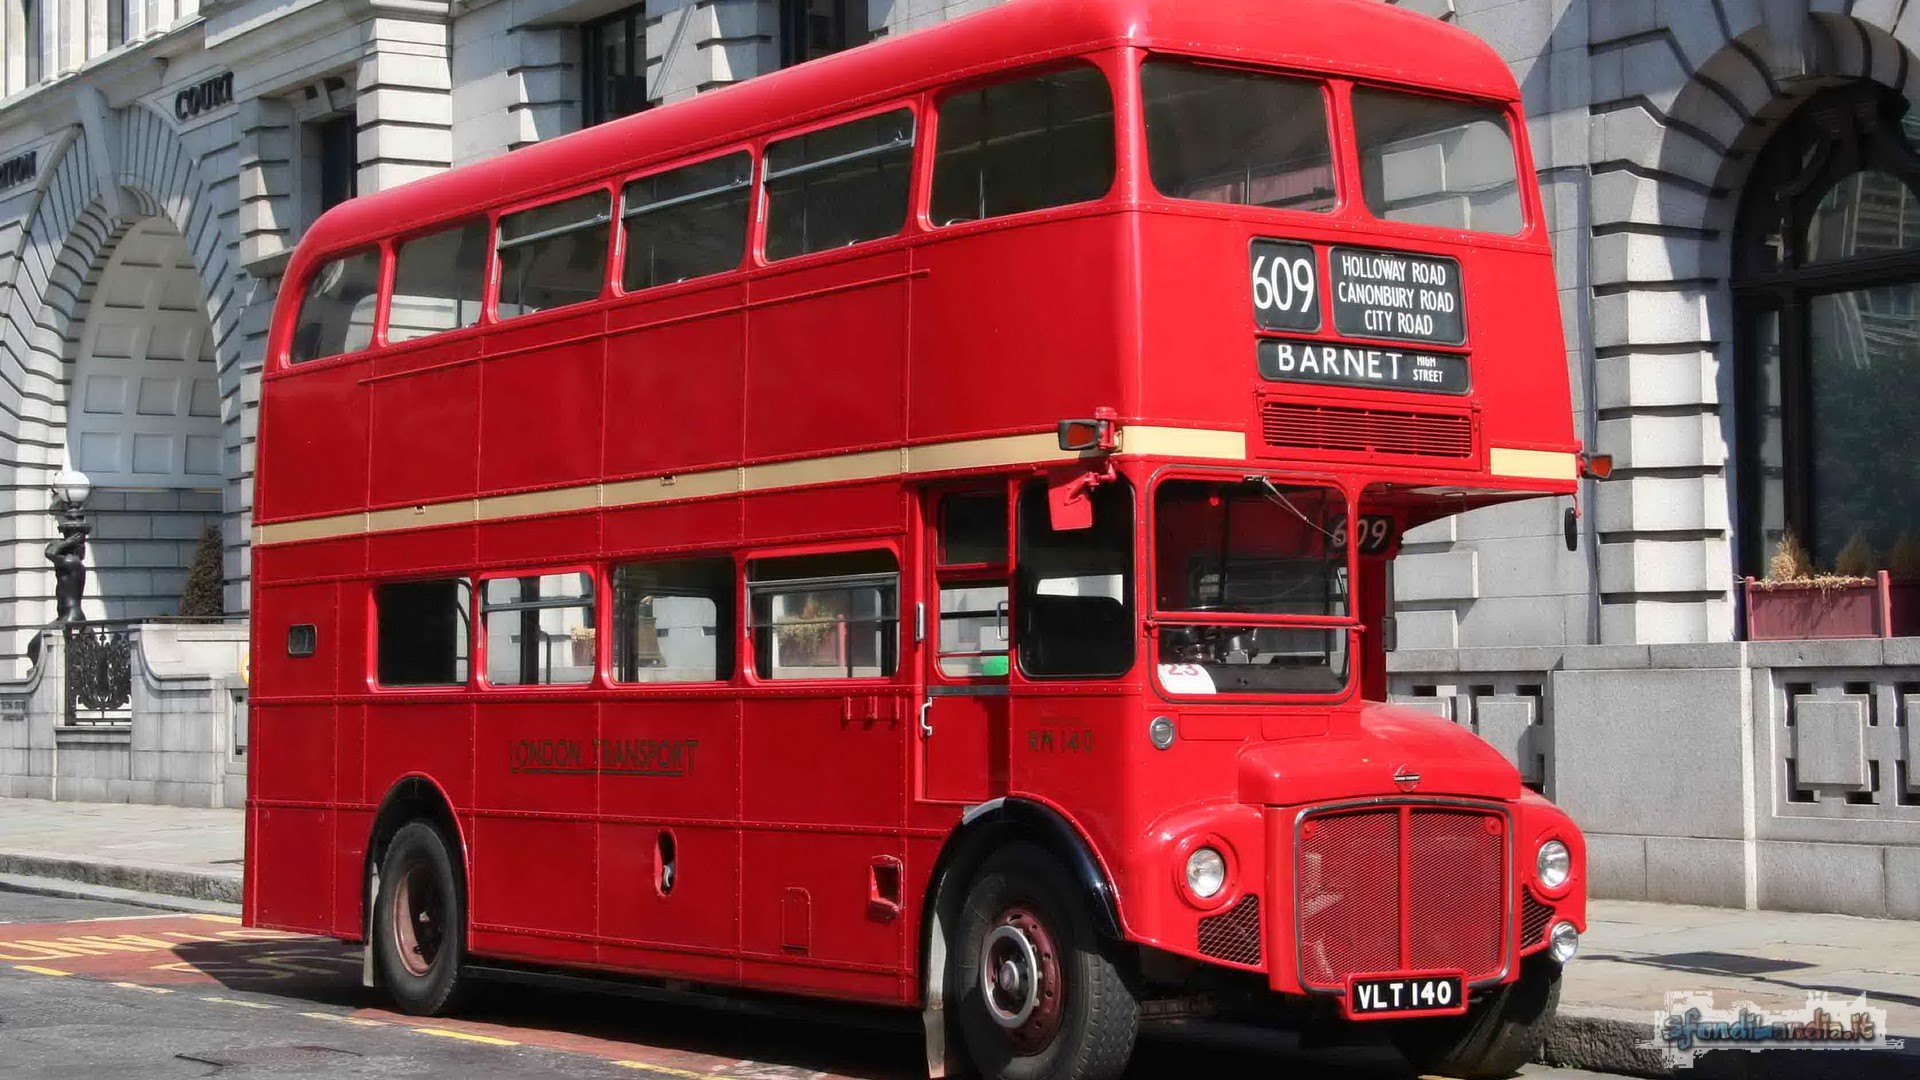 London On Bus